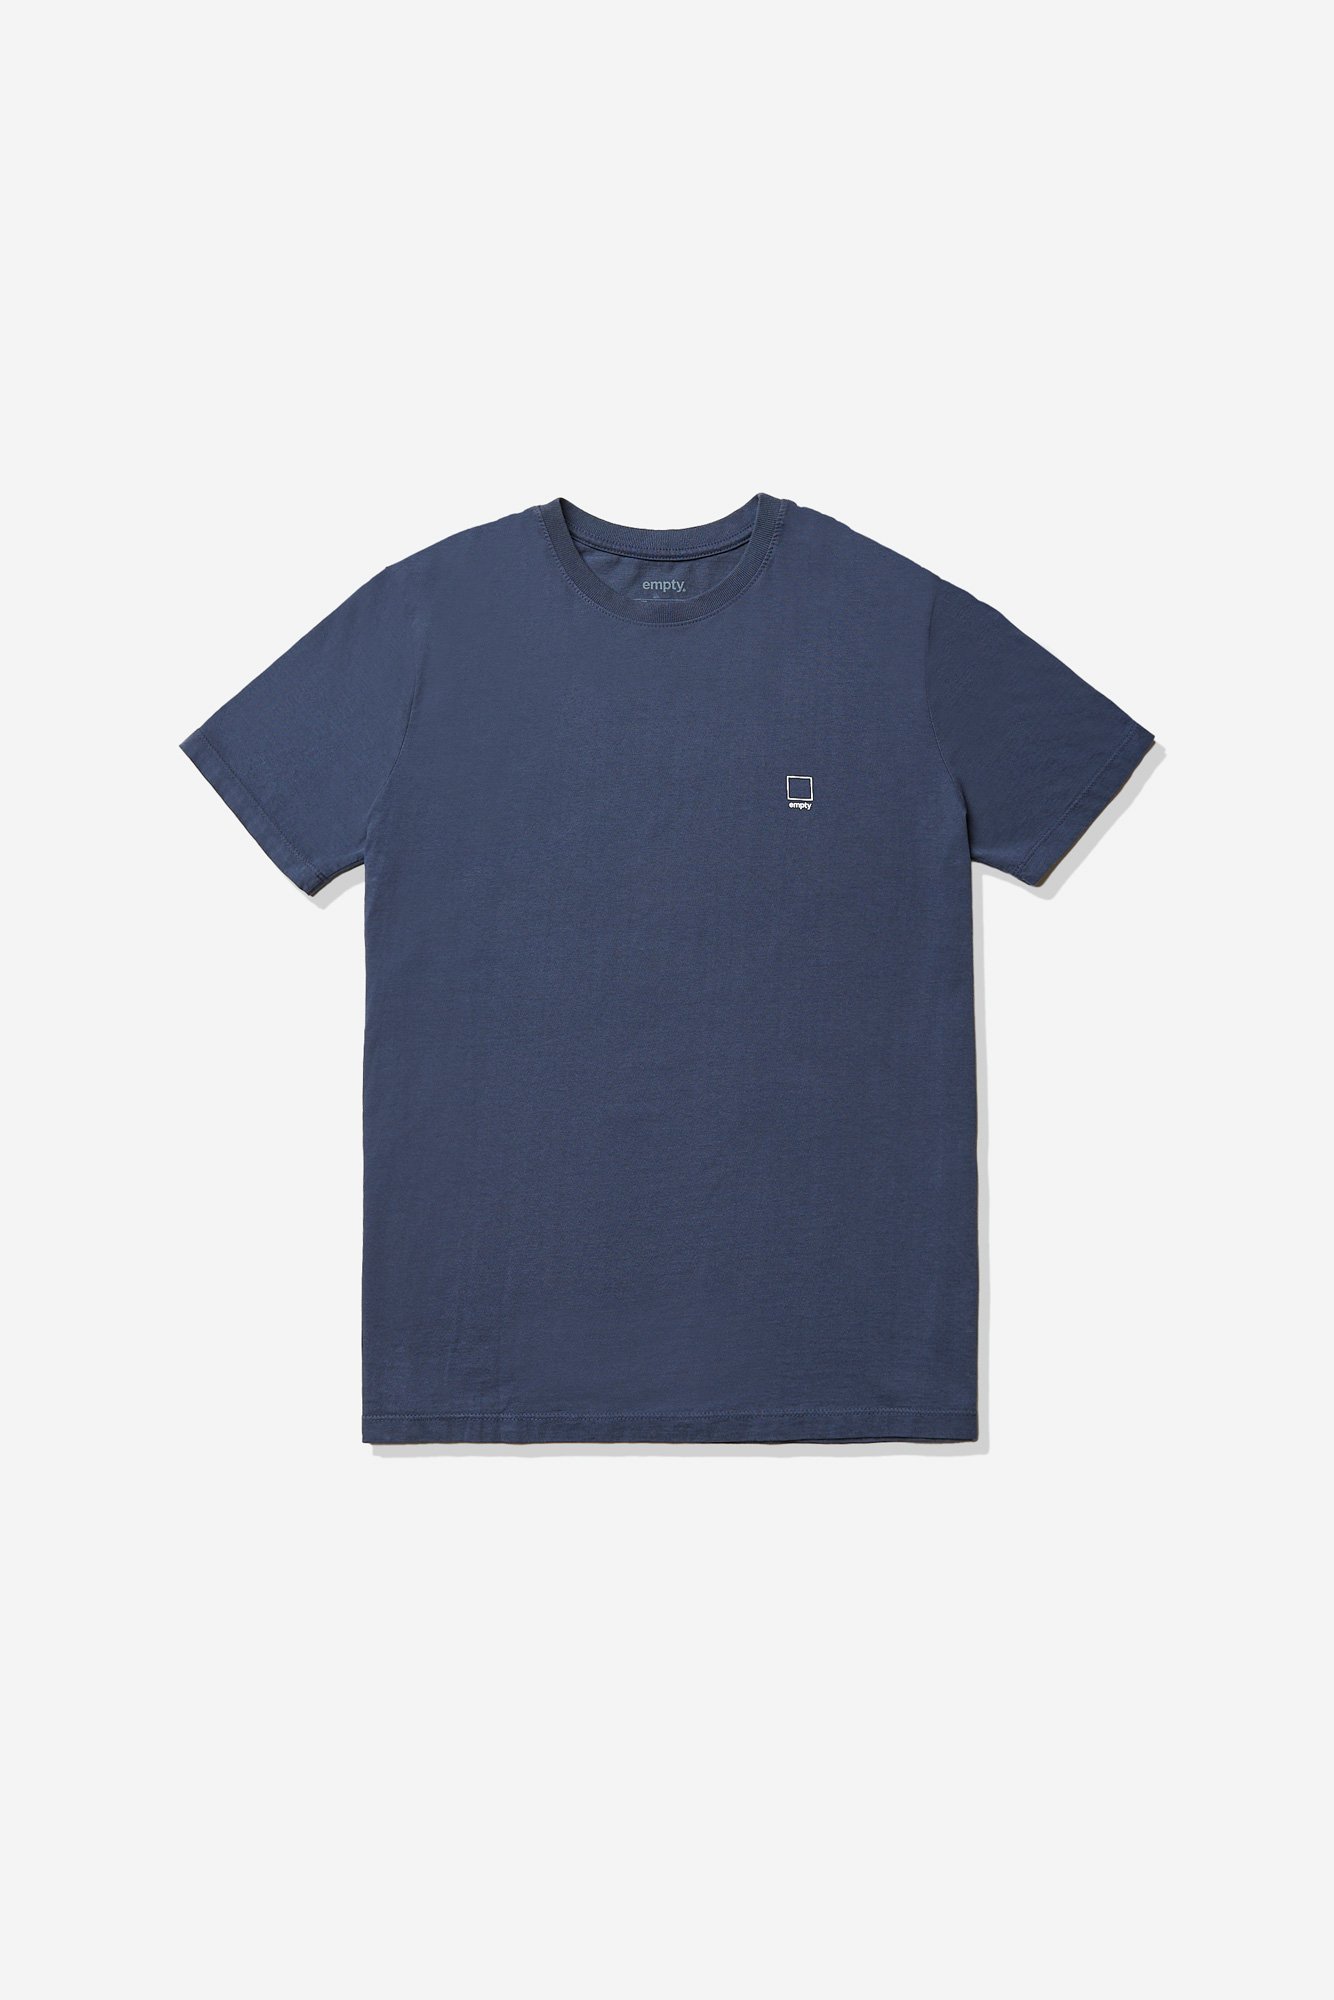 02 camiseta minico azul marinho